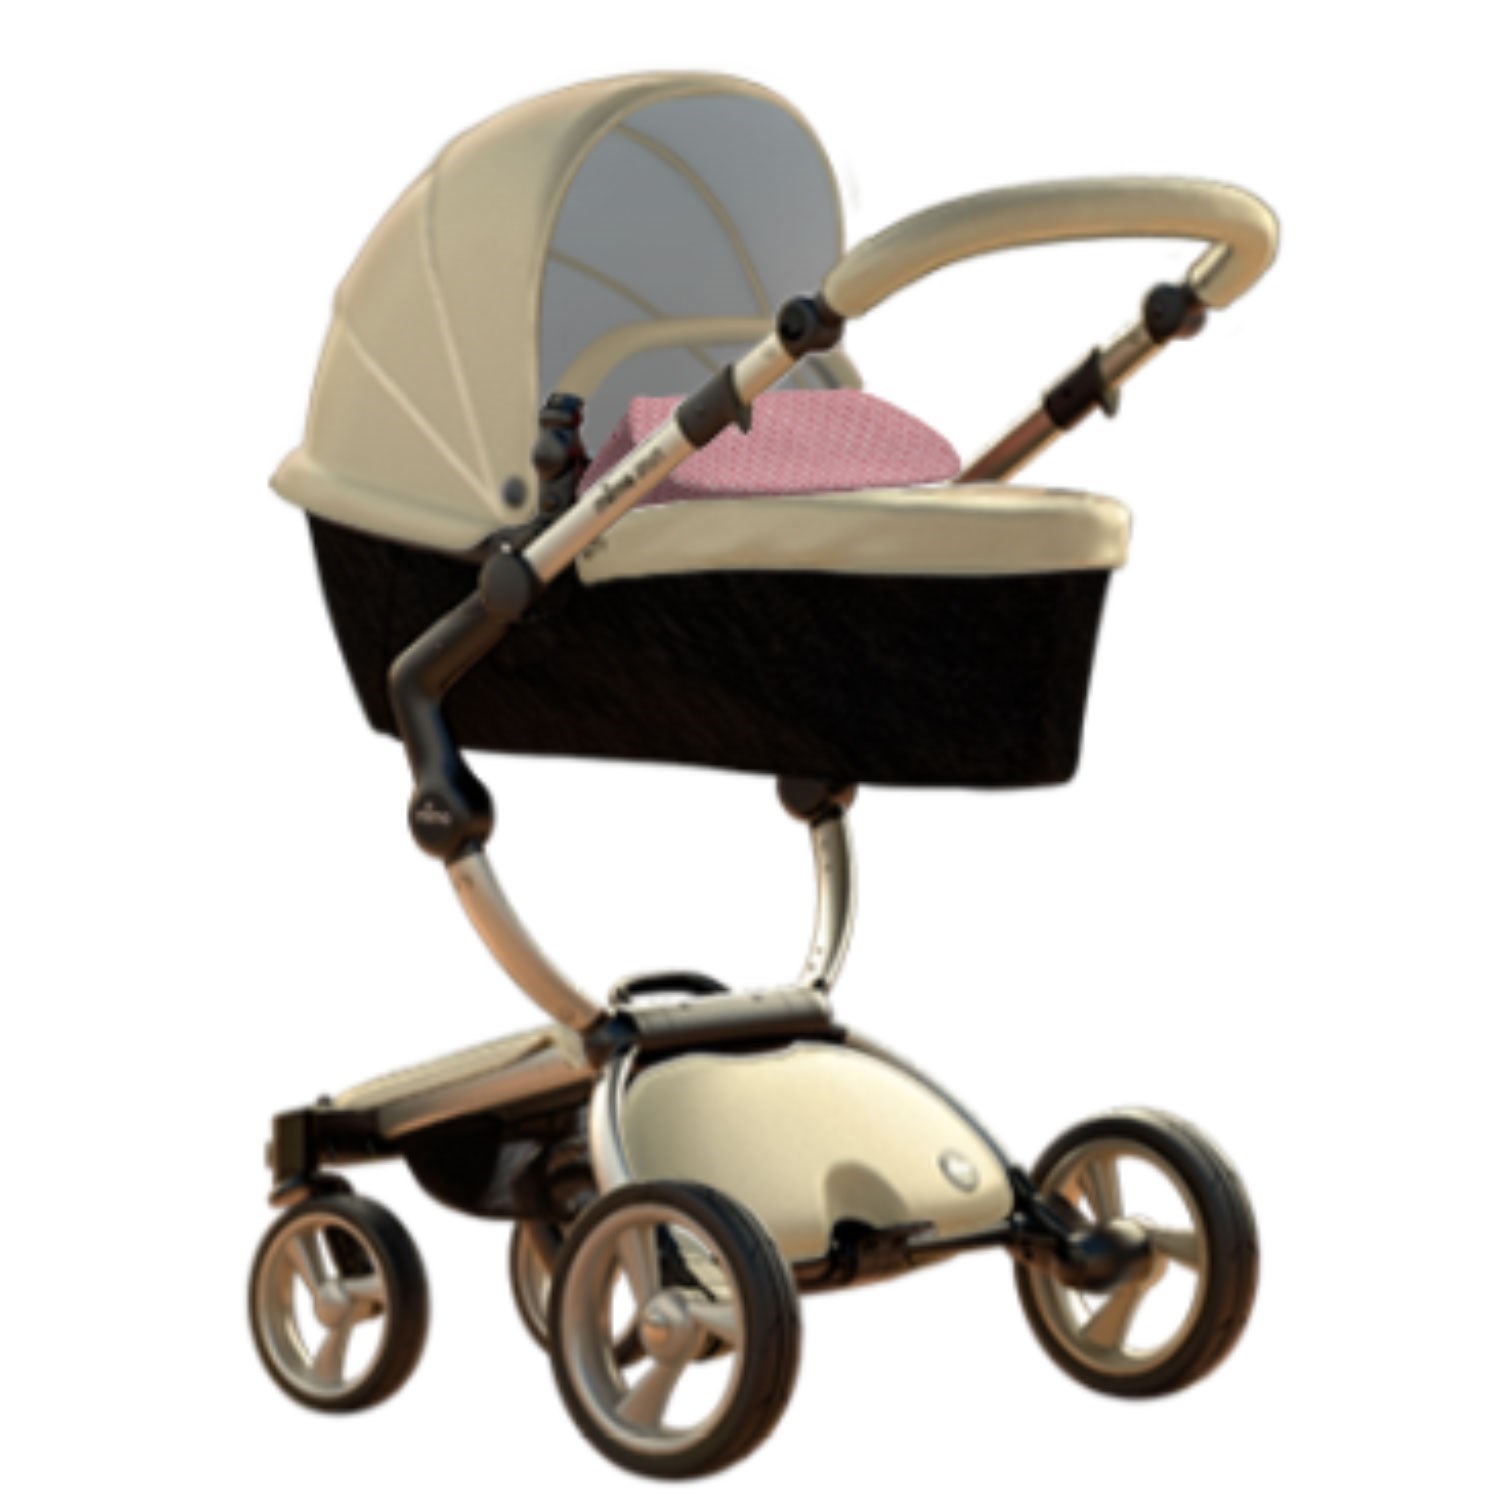 Mima Xari İkili Sistem Portbebeli Bebek Arabası Pixel Pink